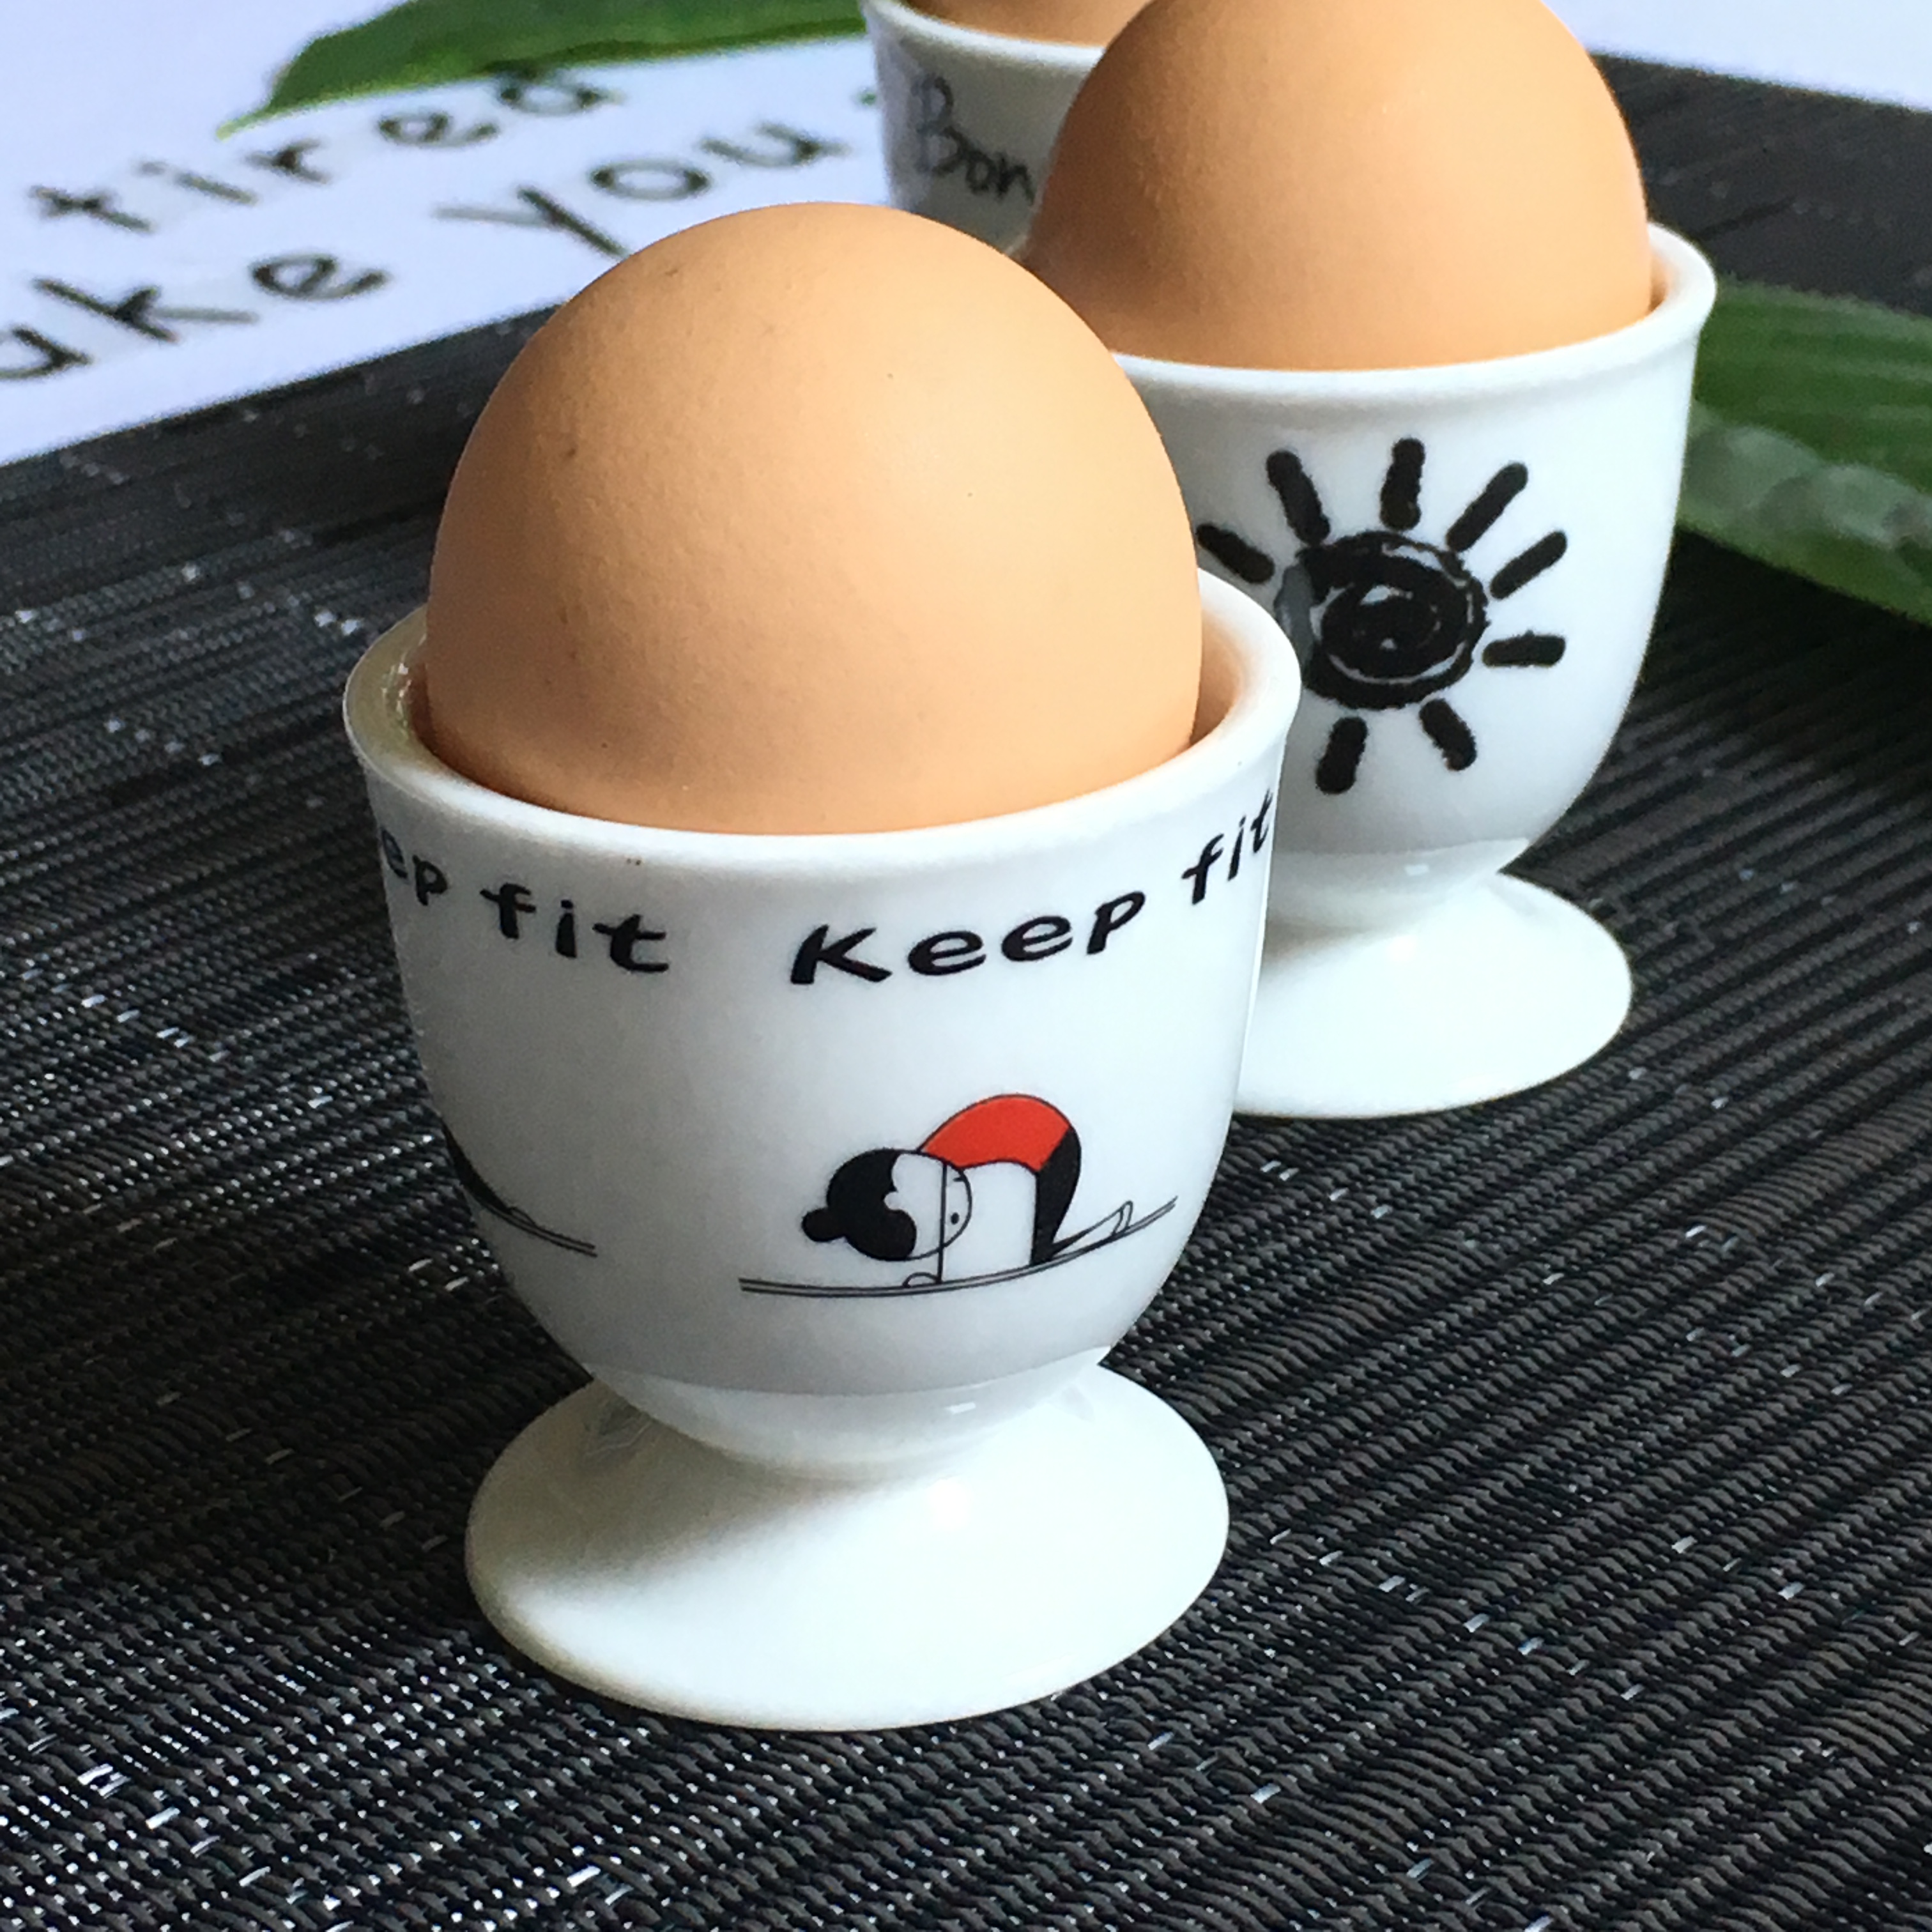 Porcelain Ceramic Egg Holder Egg Cups